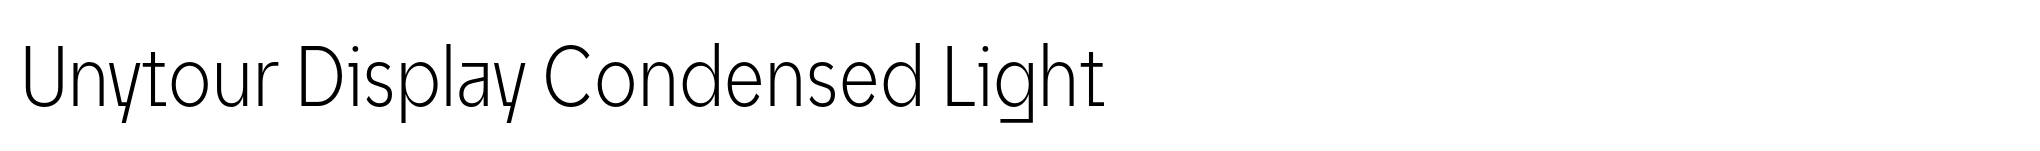 Unytour Display Condensed Light image